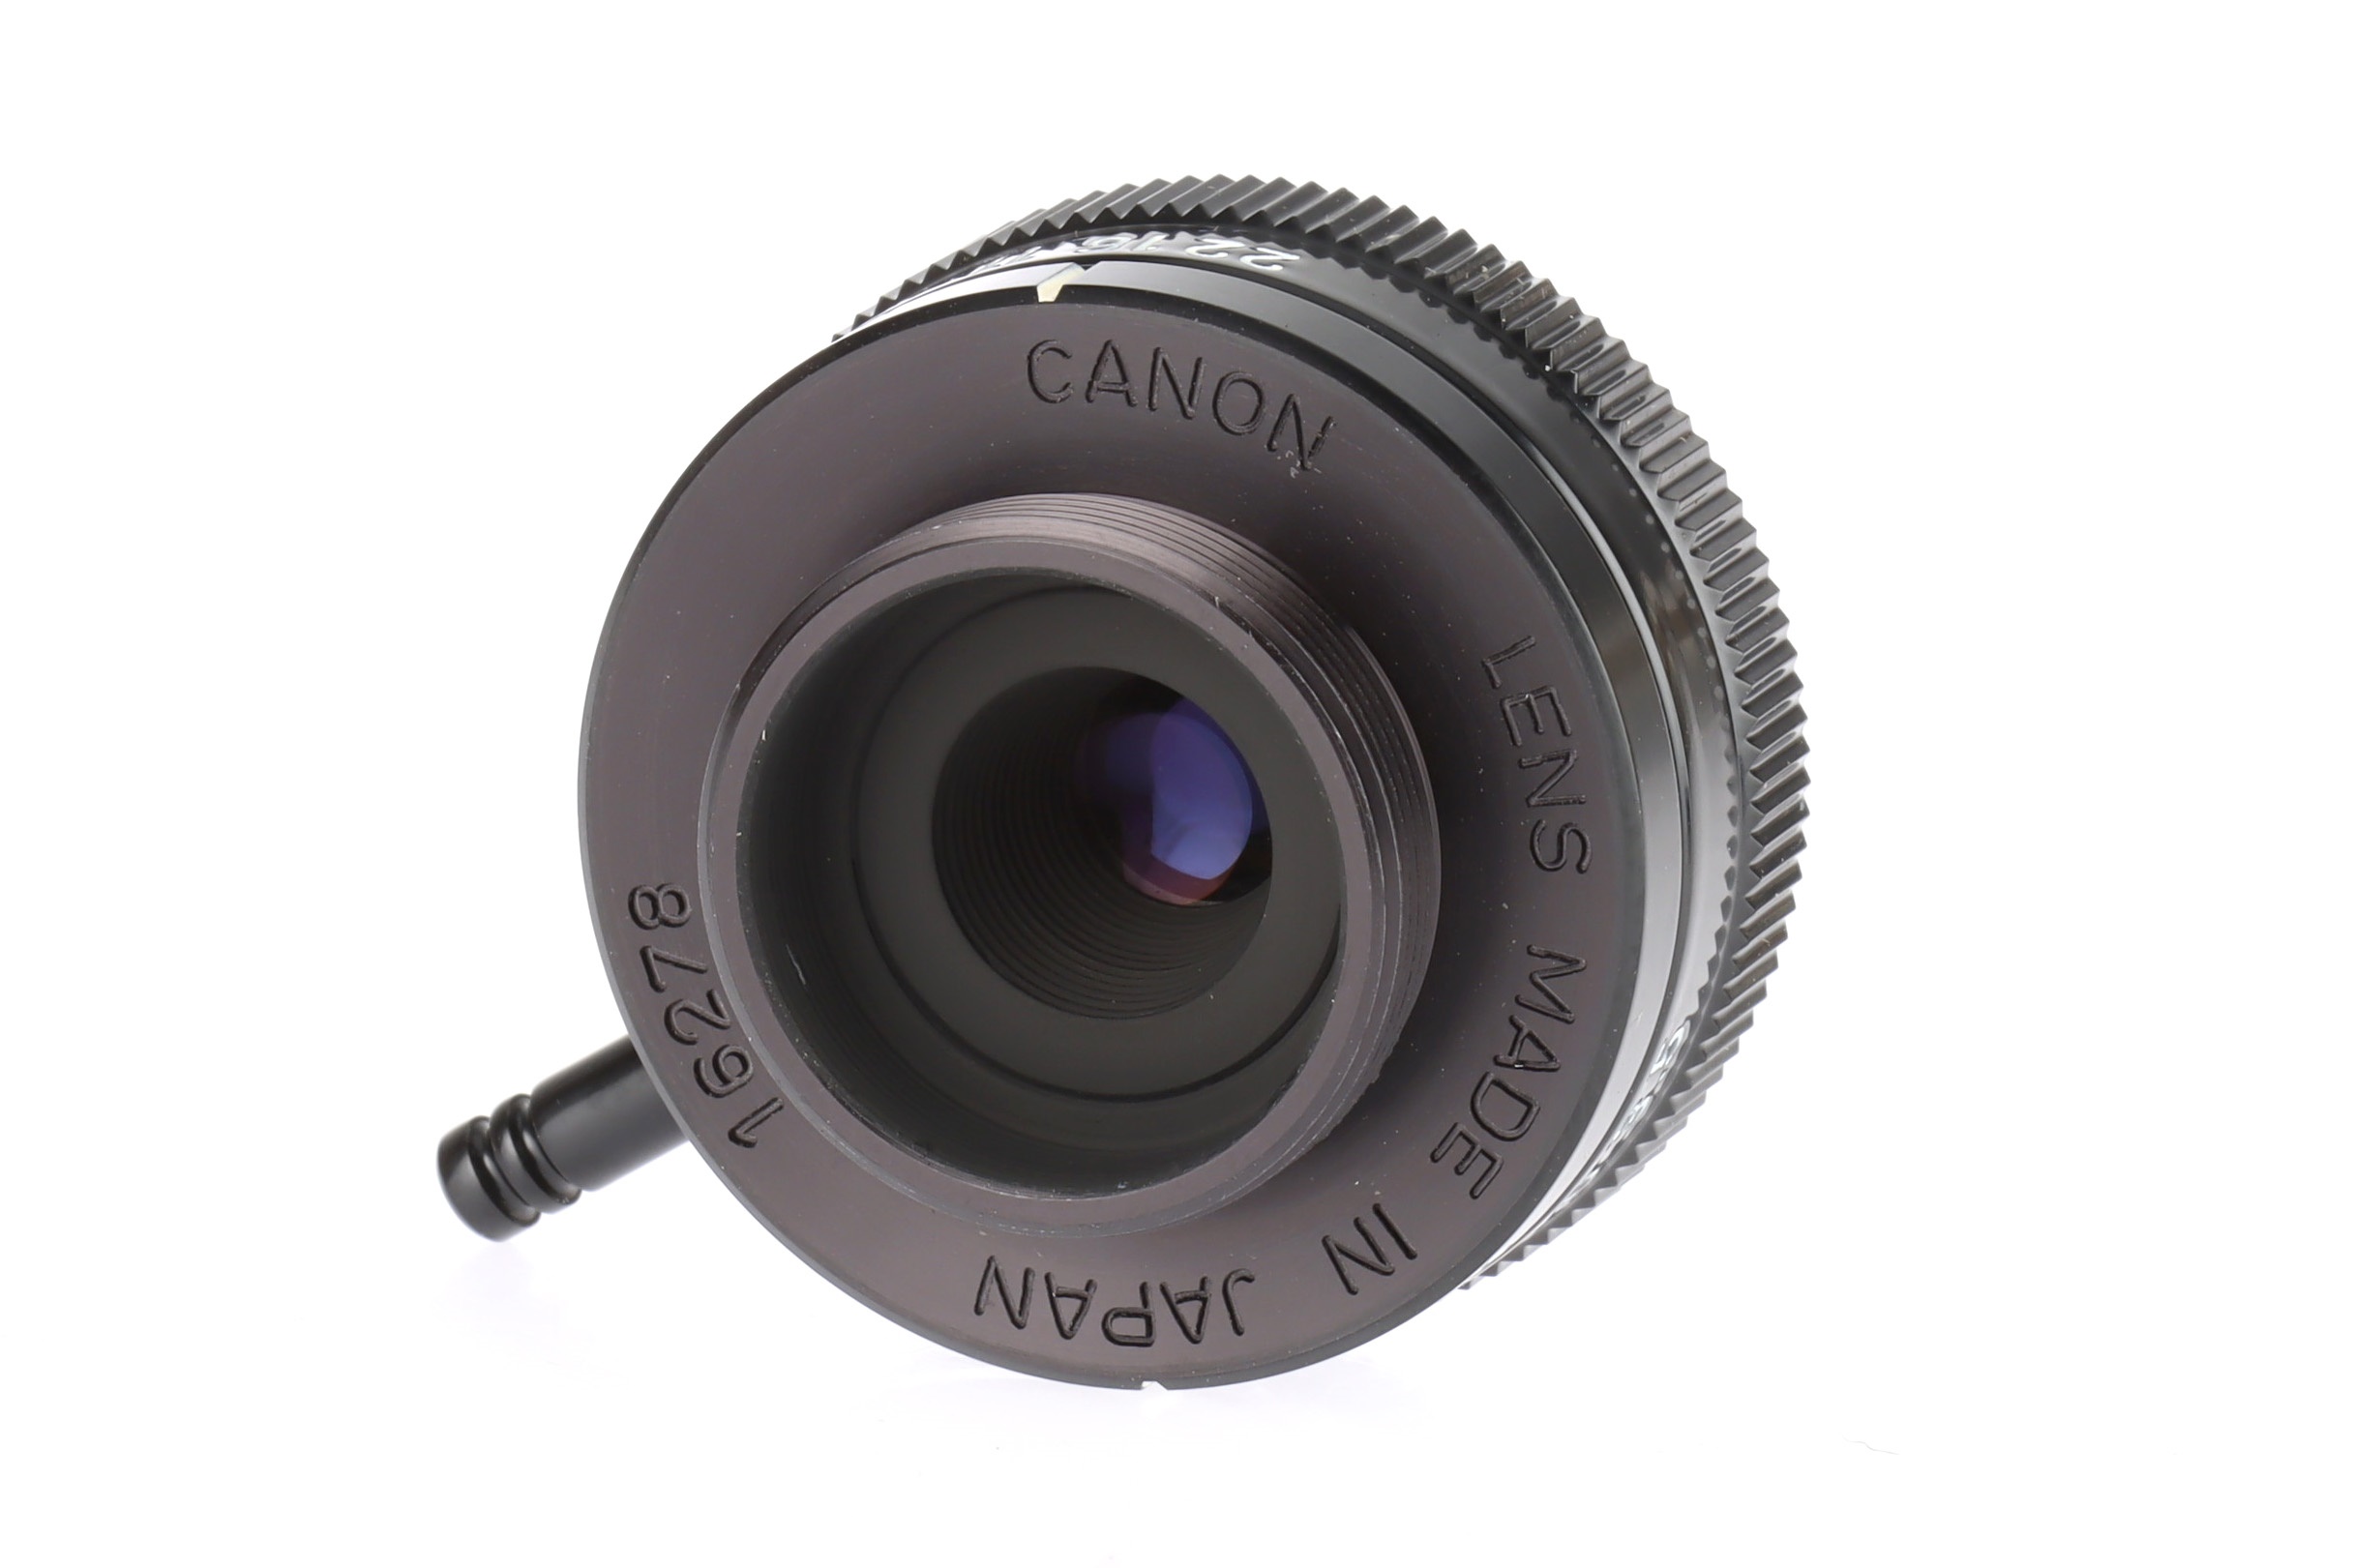 A Canon Macro Photo f/3.5 20mm Lens - Image 3 of 3